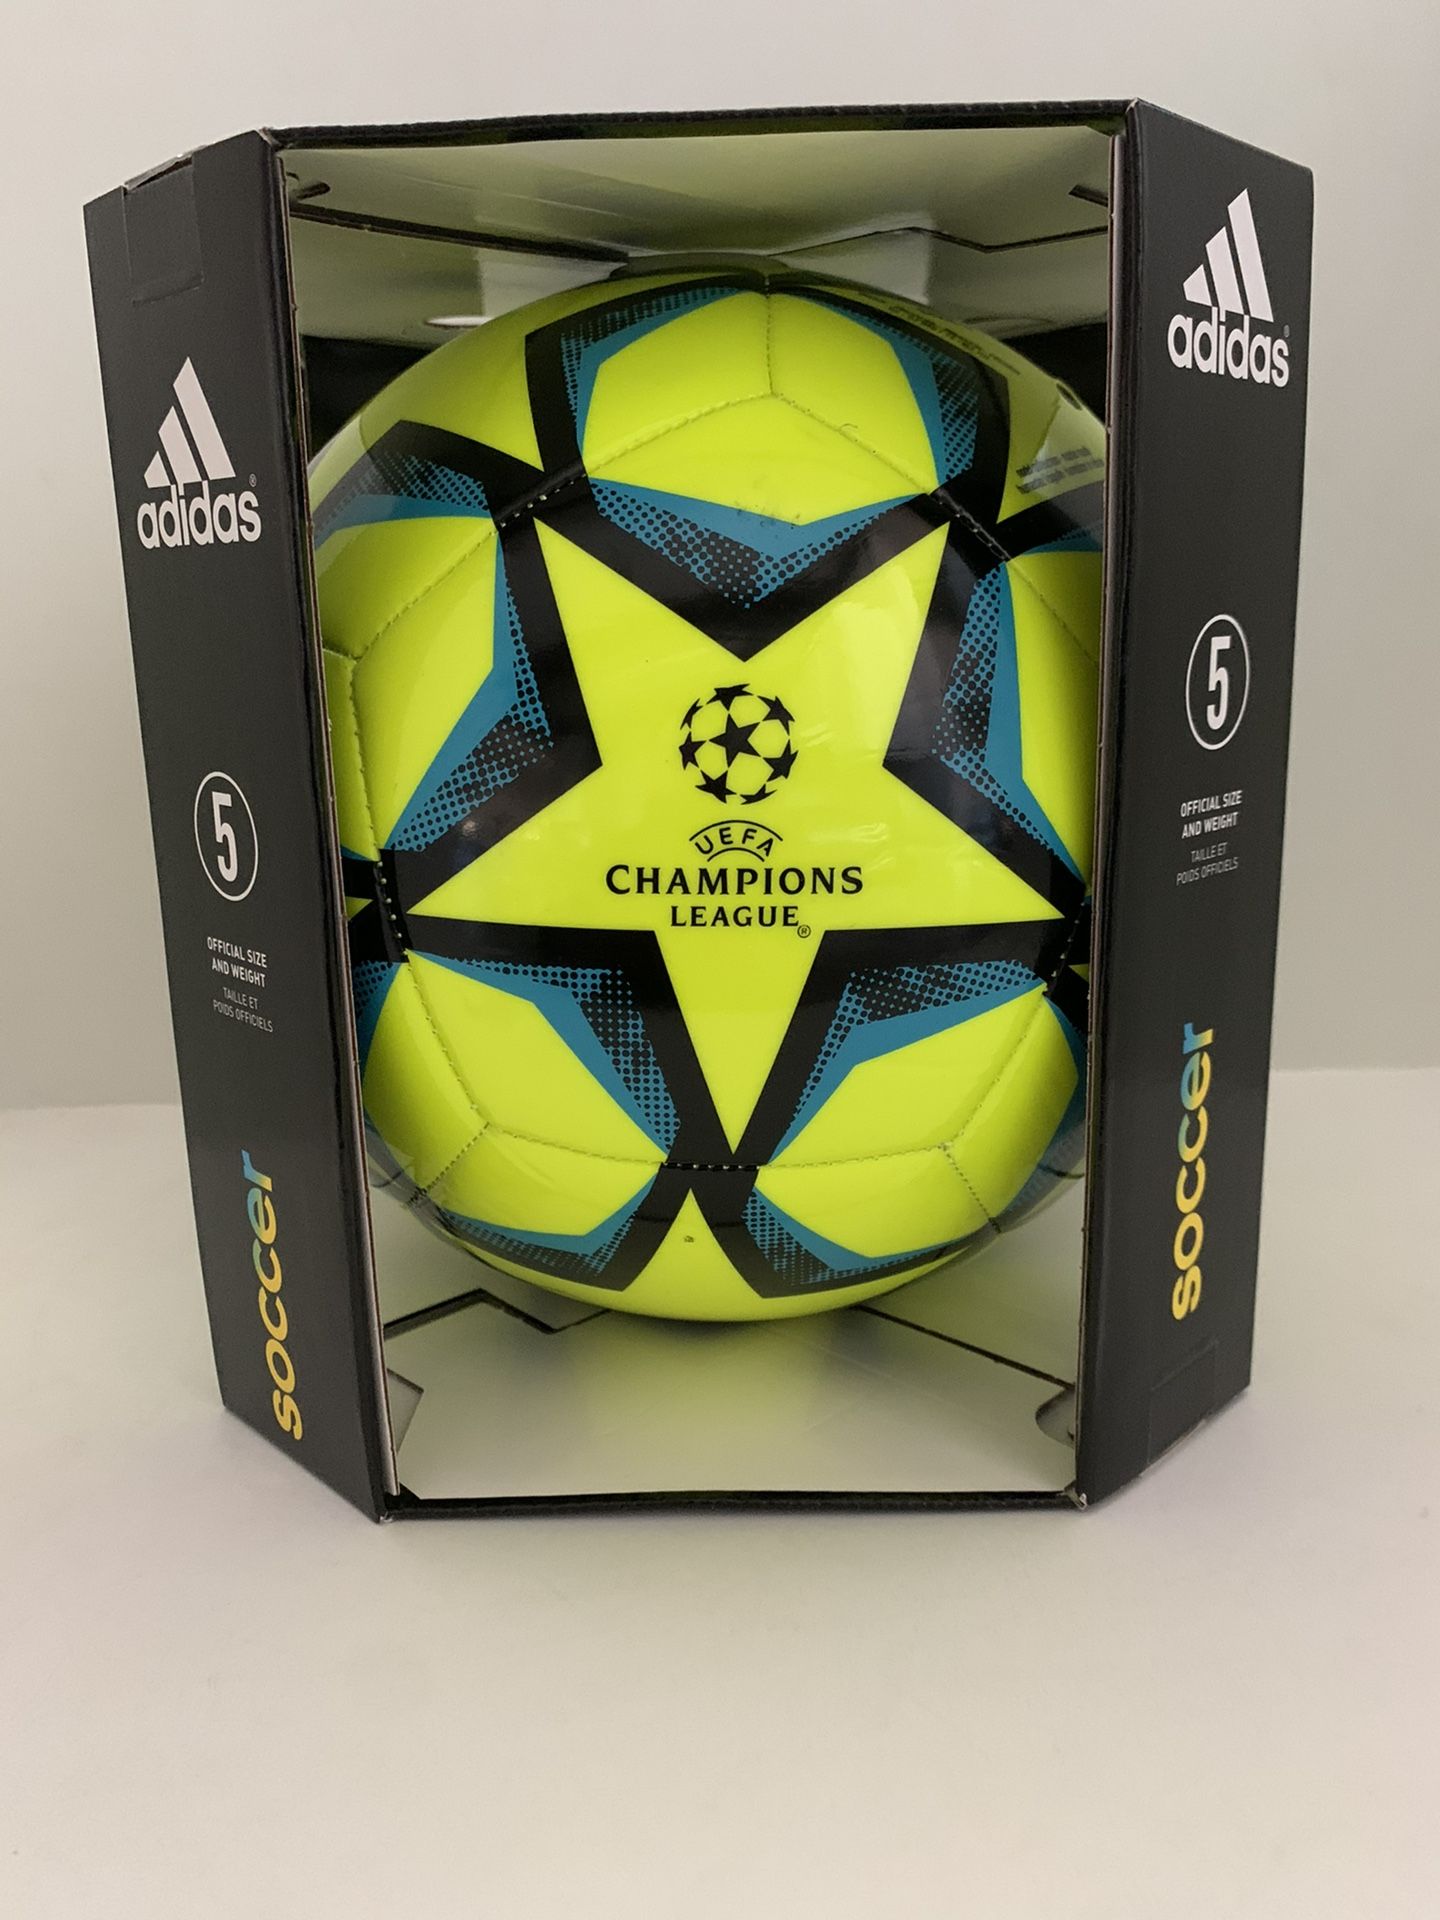 New Adidas Soccer Ball Size 5